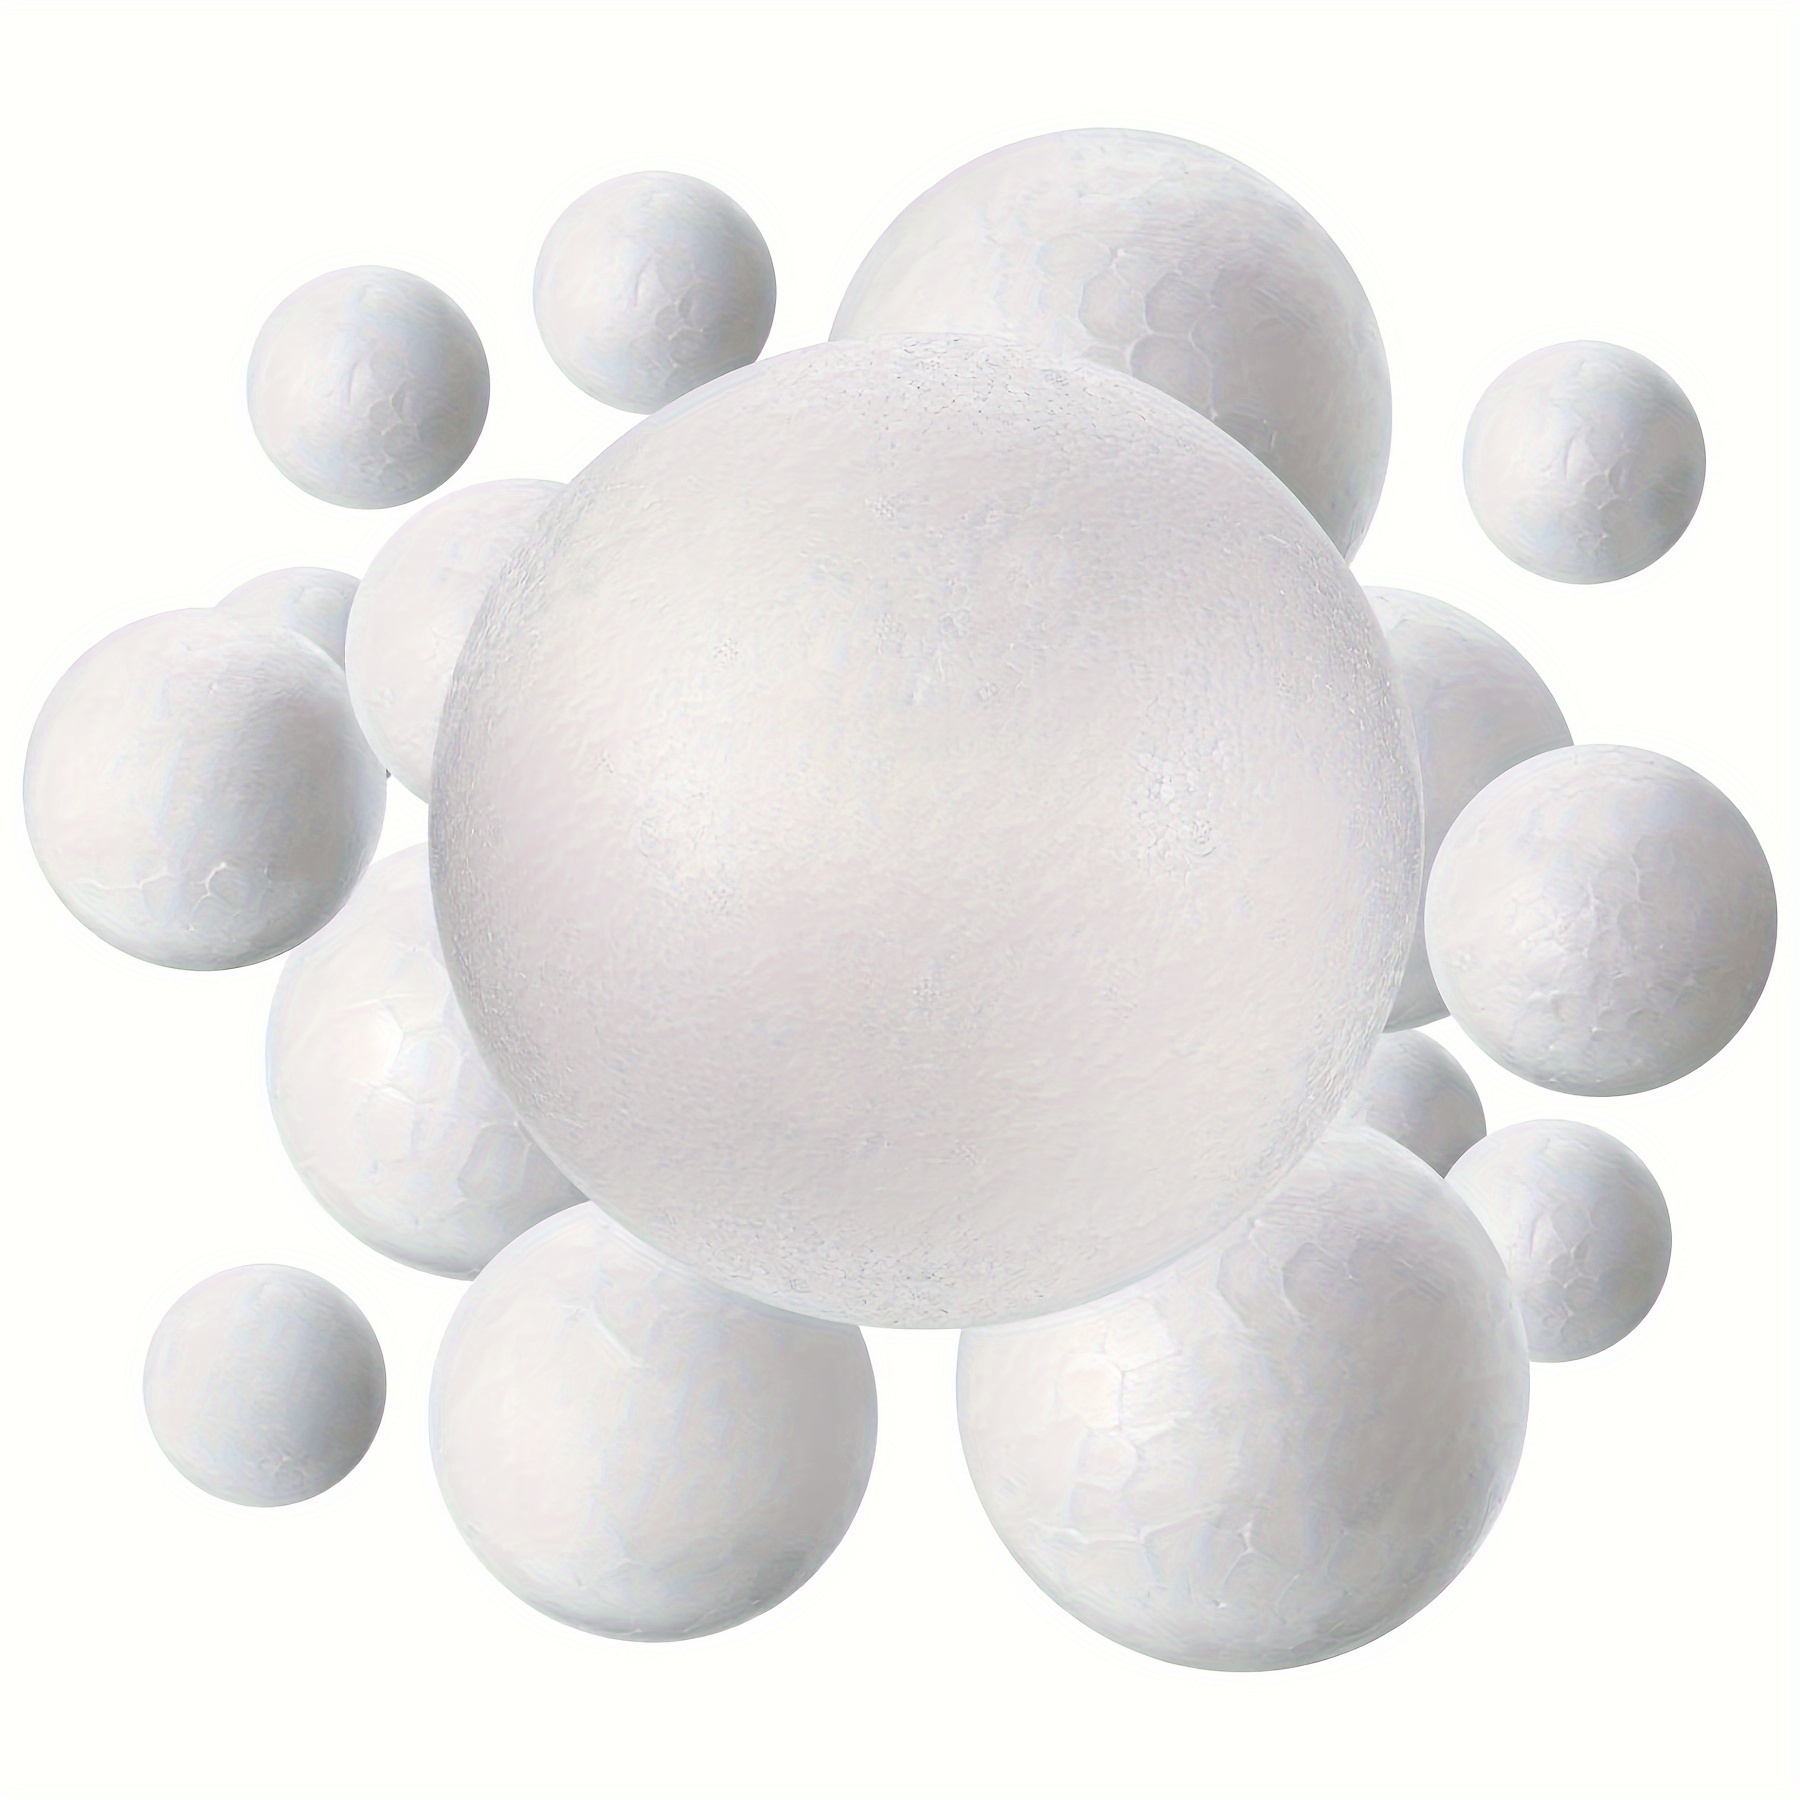 Ensemble de 20 formes en polystyrène (sphère, diamètre 5 cm